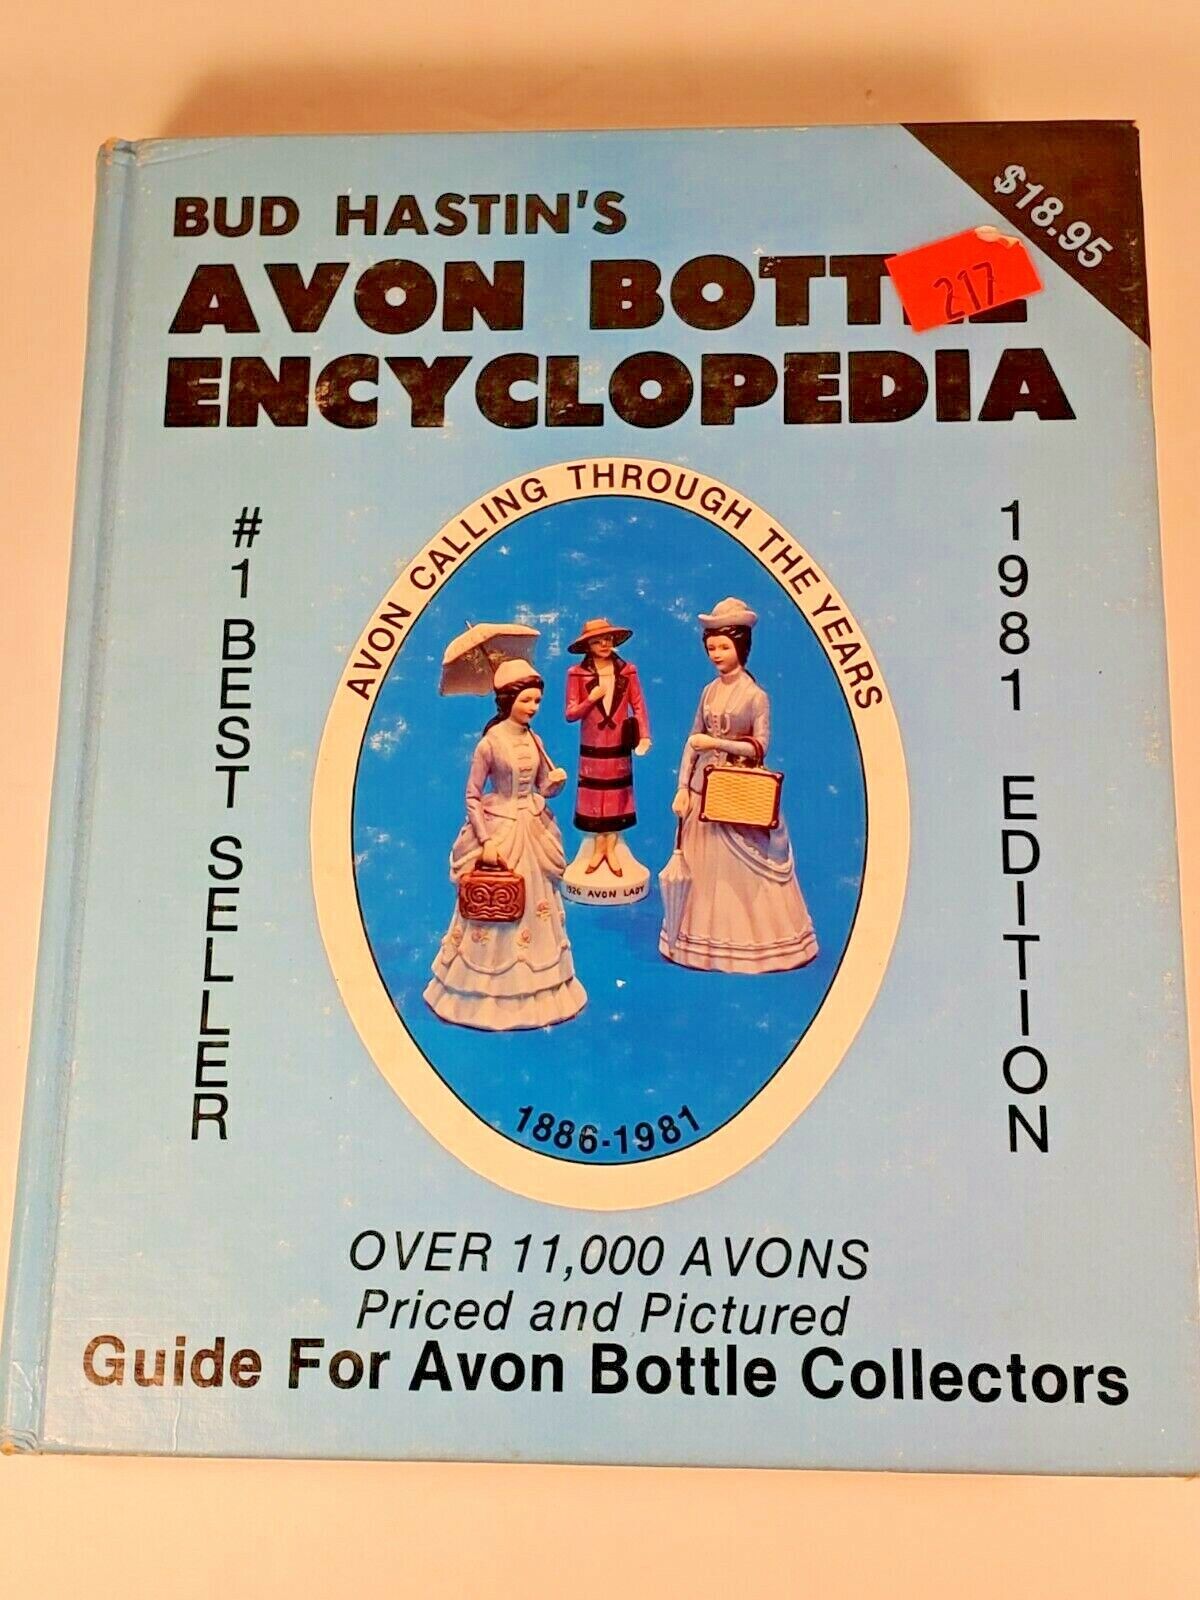 Bud Hastin's Avon Bottle Encyclopedia, Hardcover 1886-1981~8th Edition